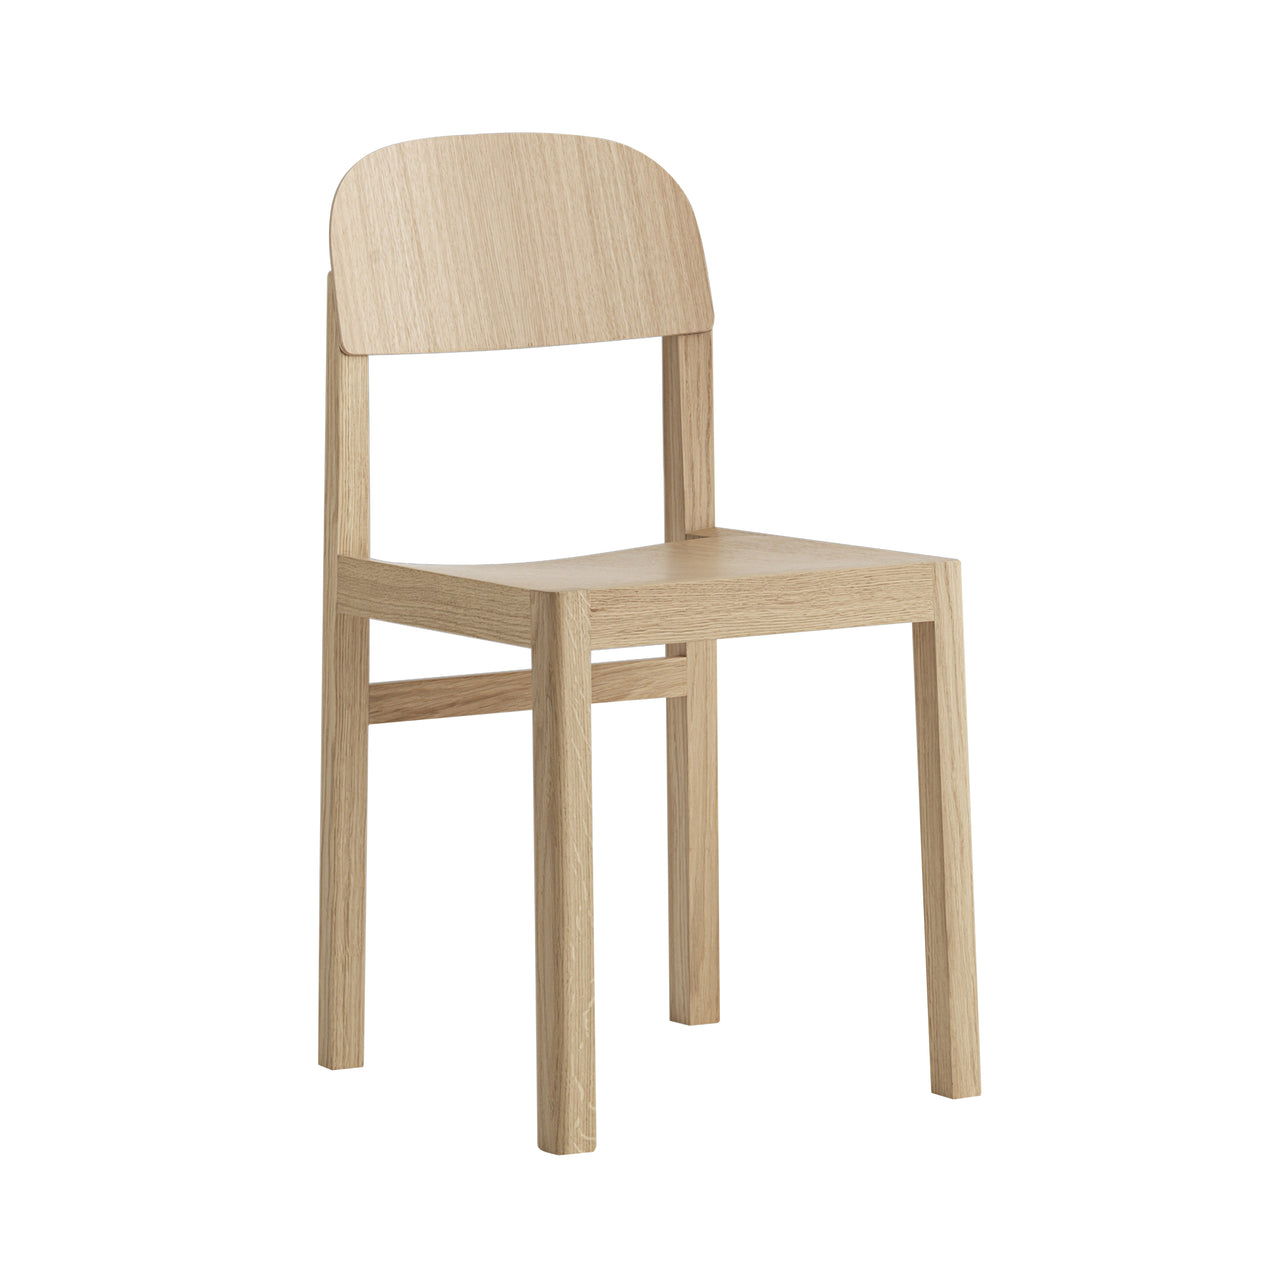 Workshop Chair: Oak